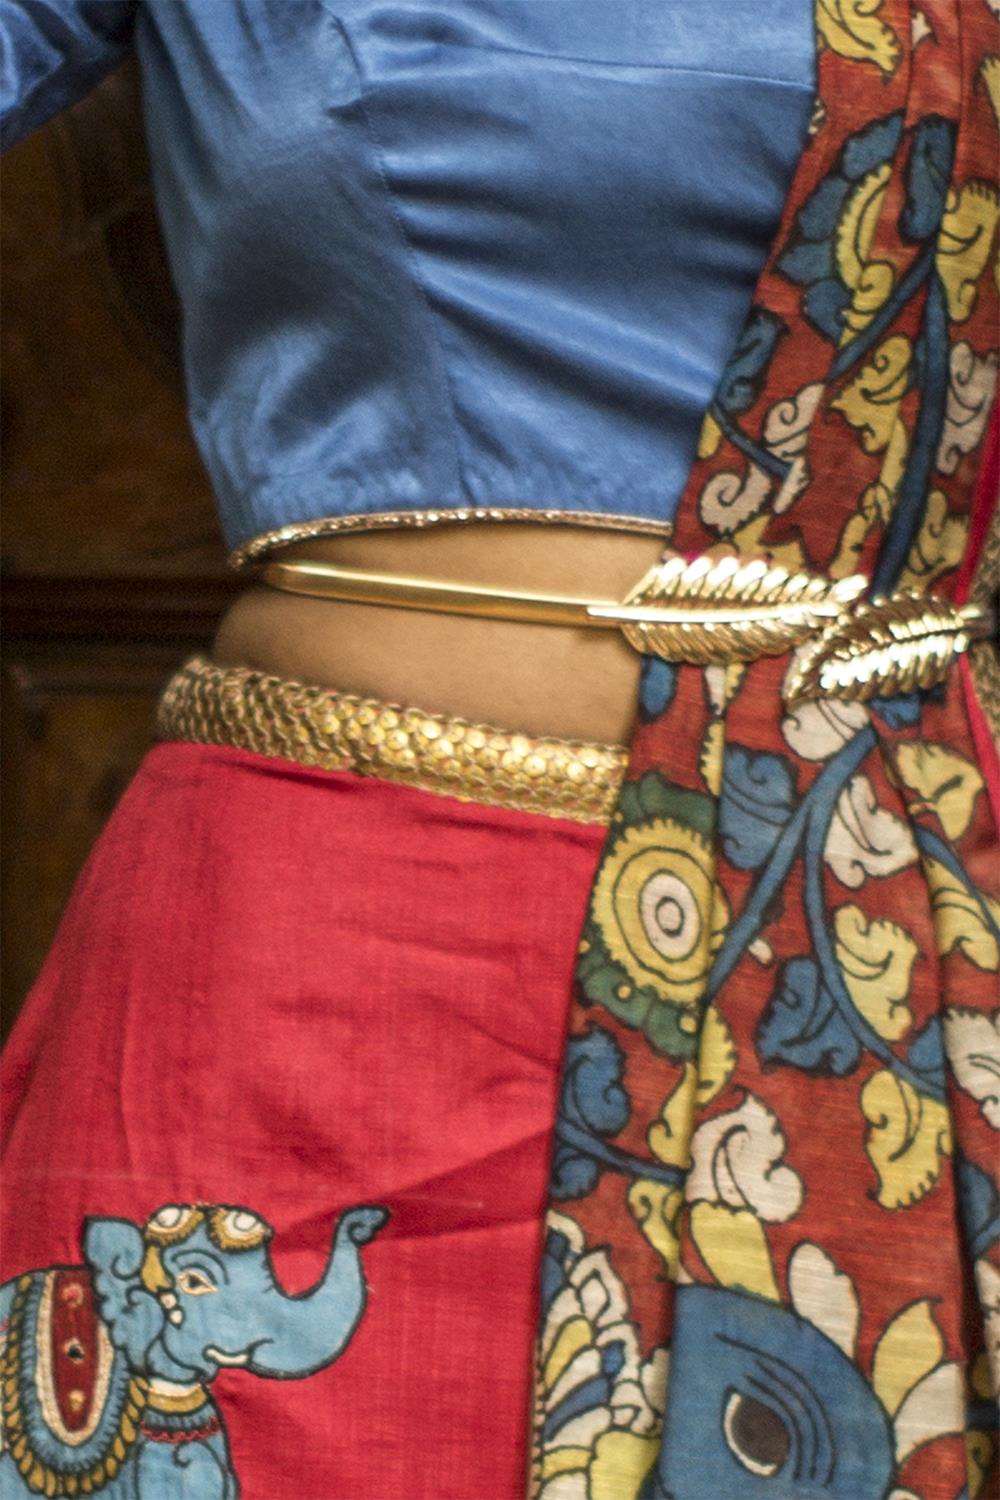 Cross leaf elasticated gold plated metal waist band